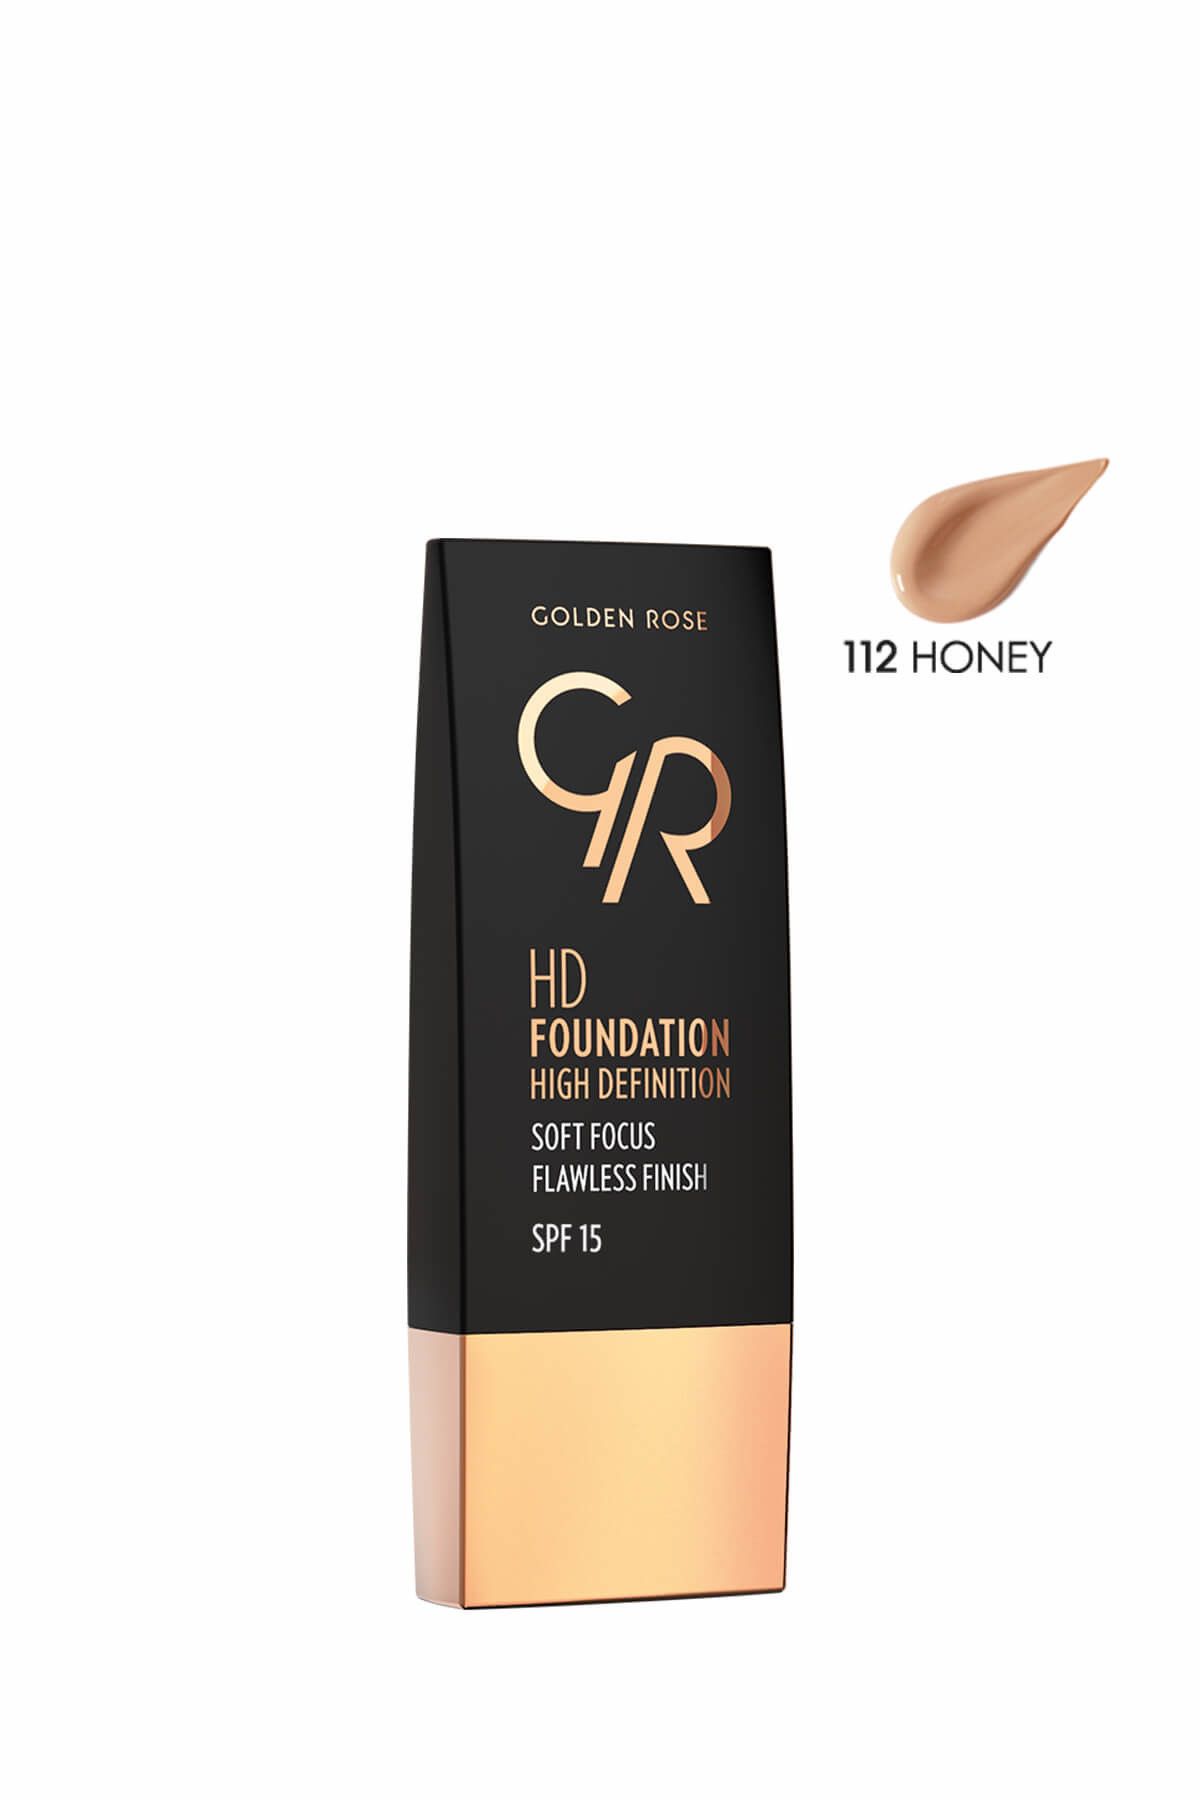 Golden Rose Fondöten - HD Foundation High Definition 112 Honey 8691190832629